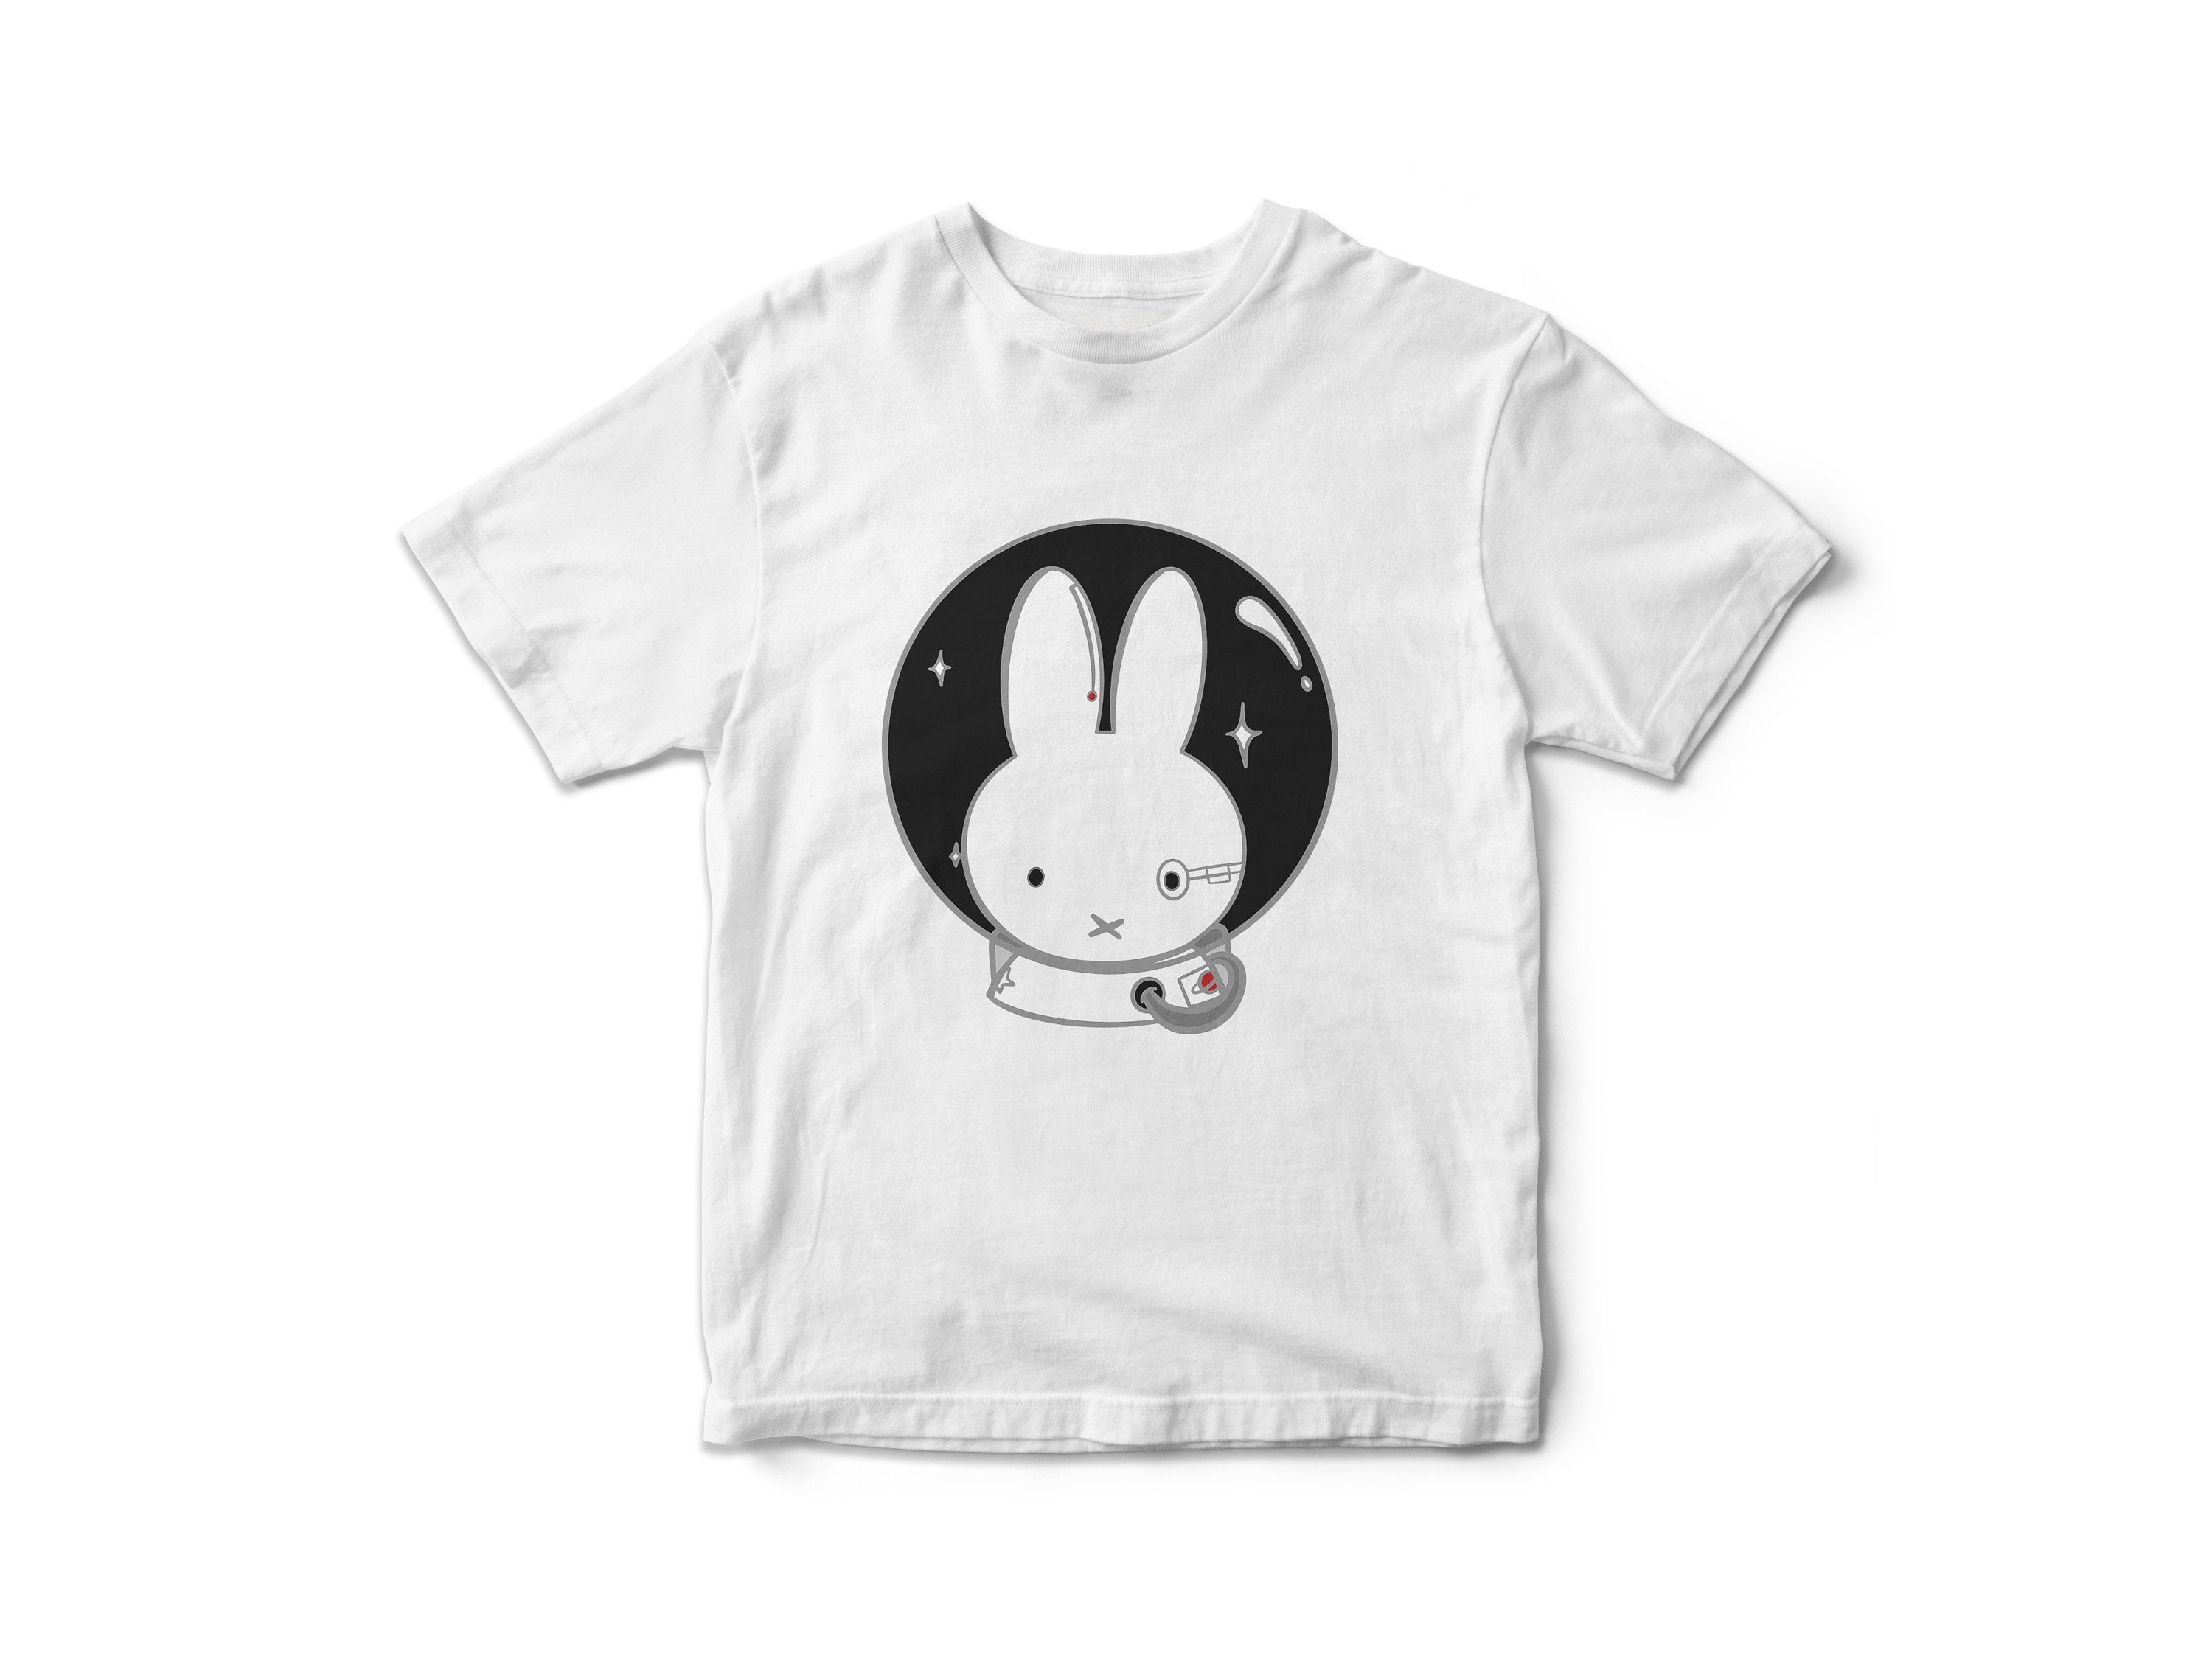 Borg Bunny T-Shirt - Minimalist / Futuristic Space Fashion - Kawaii Astronaut Tee